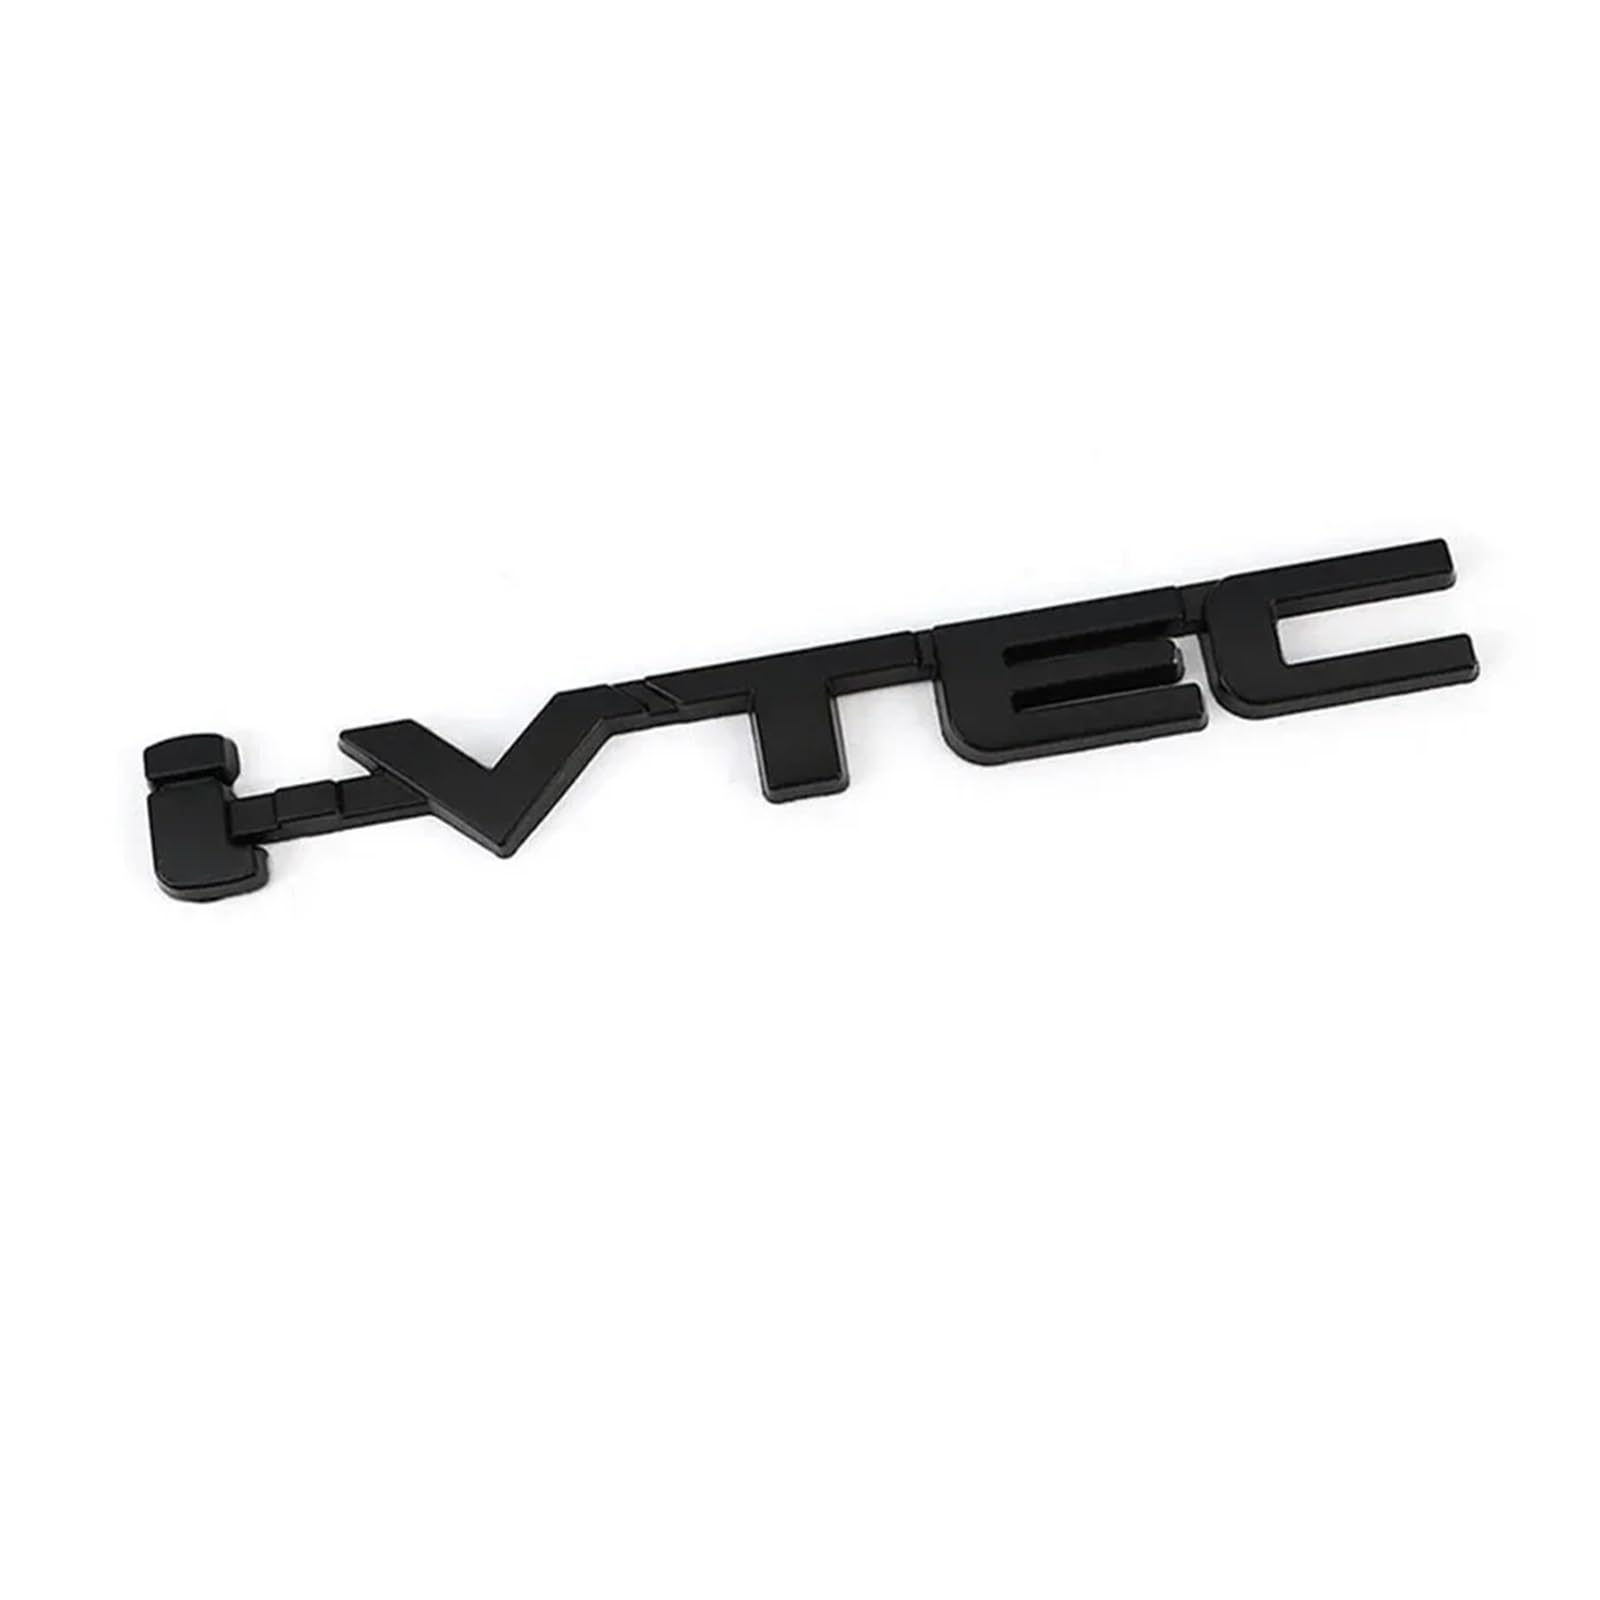 AQXYWQOL Autoaufkleber VTEC Emblem Aufkleber kompatibel mit I VTEC Badge Fit Accord Odyssey CRV HRV Außenzubehör Dekoration Farbe ist konstant, verblasst nicht und beschädigt(B Black) von AQXYWQOL